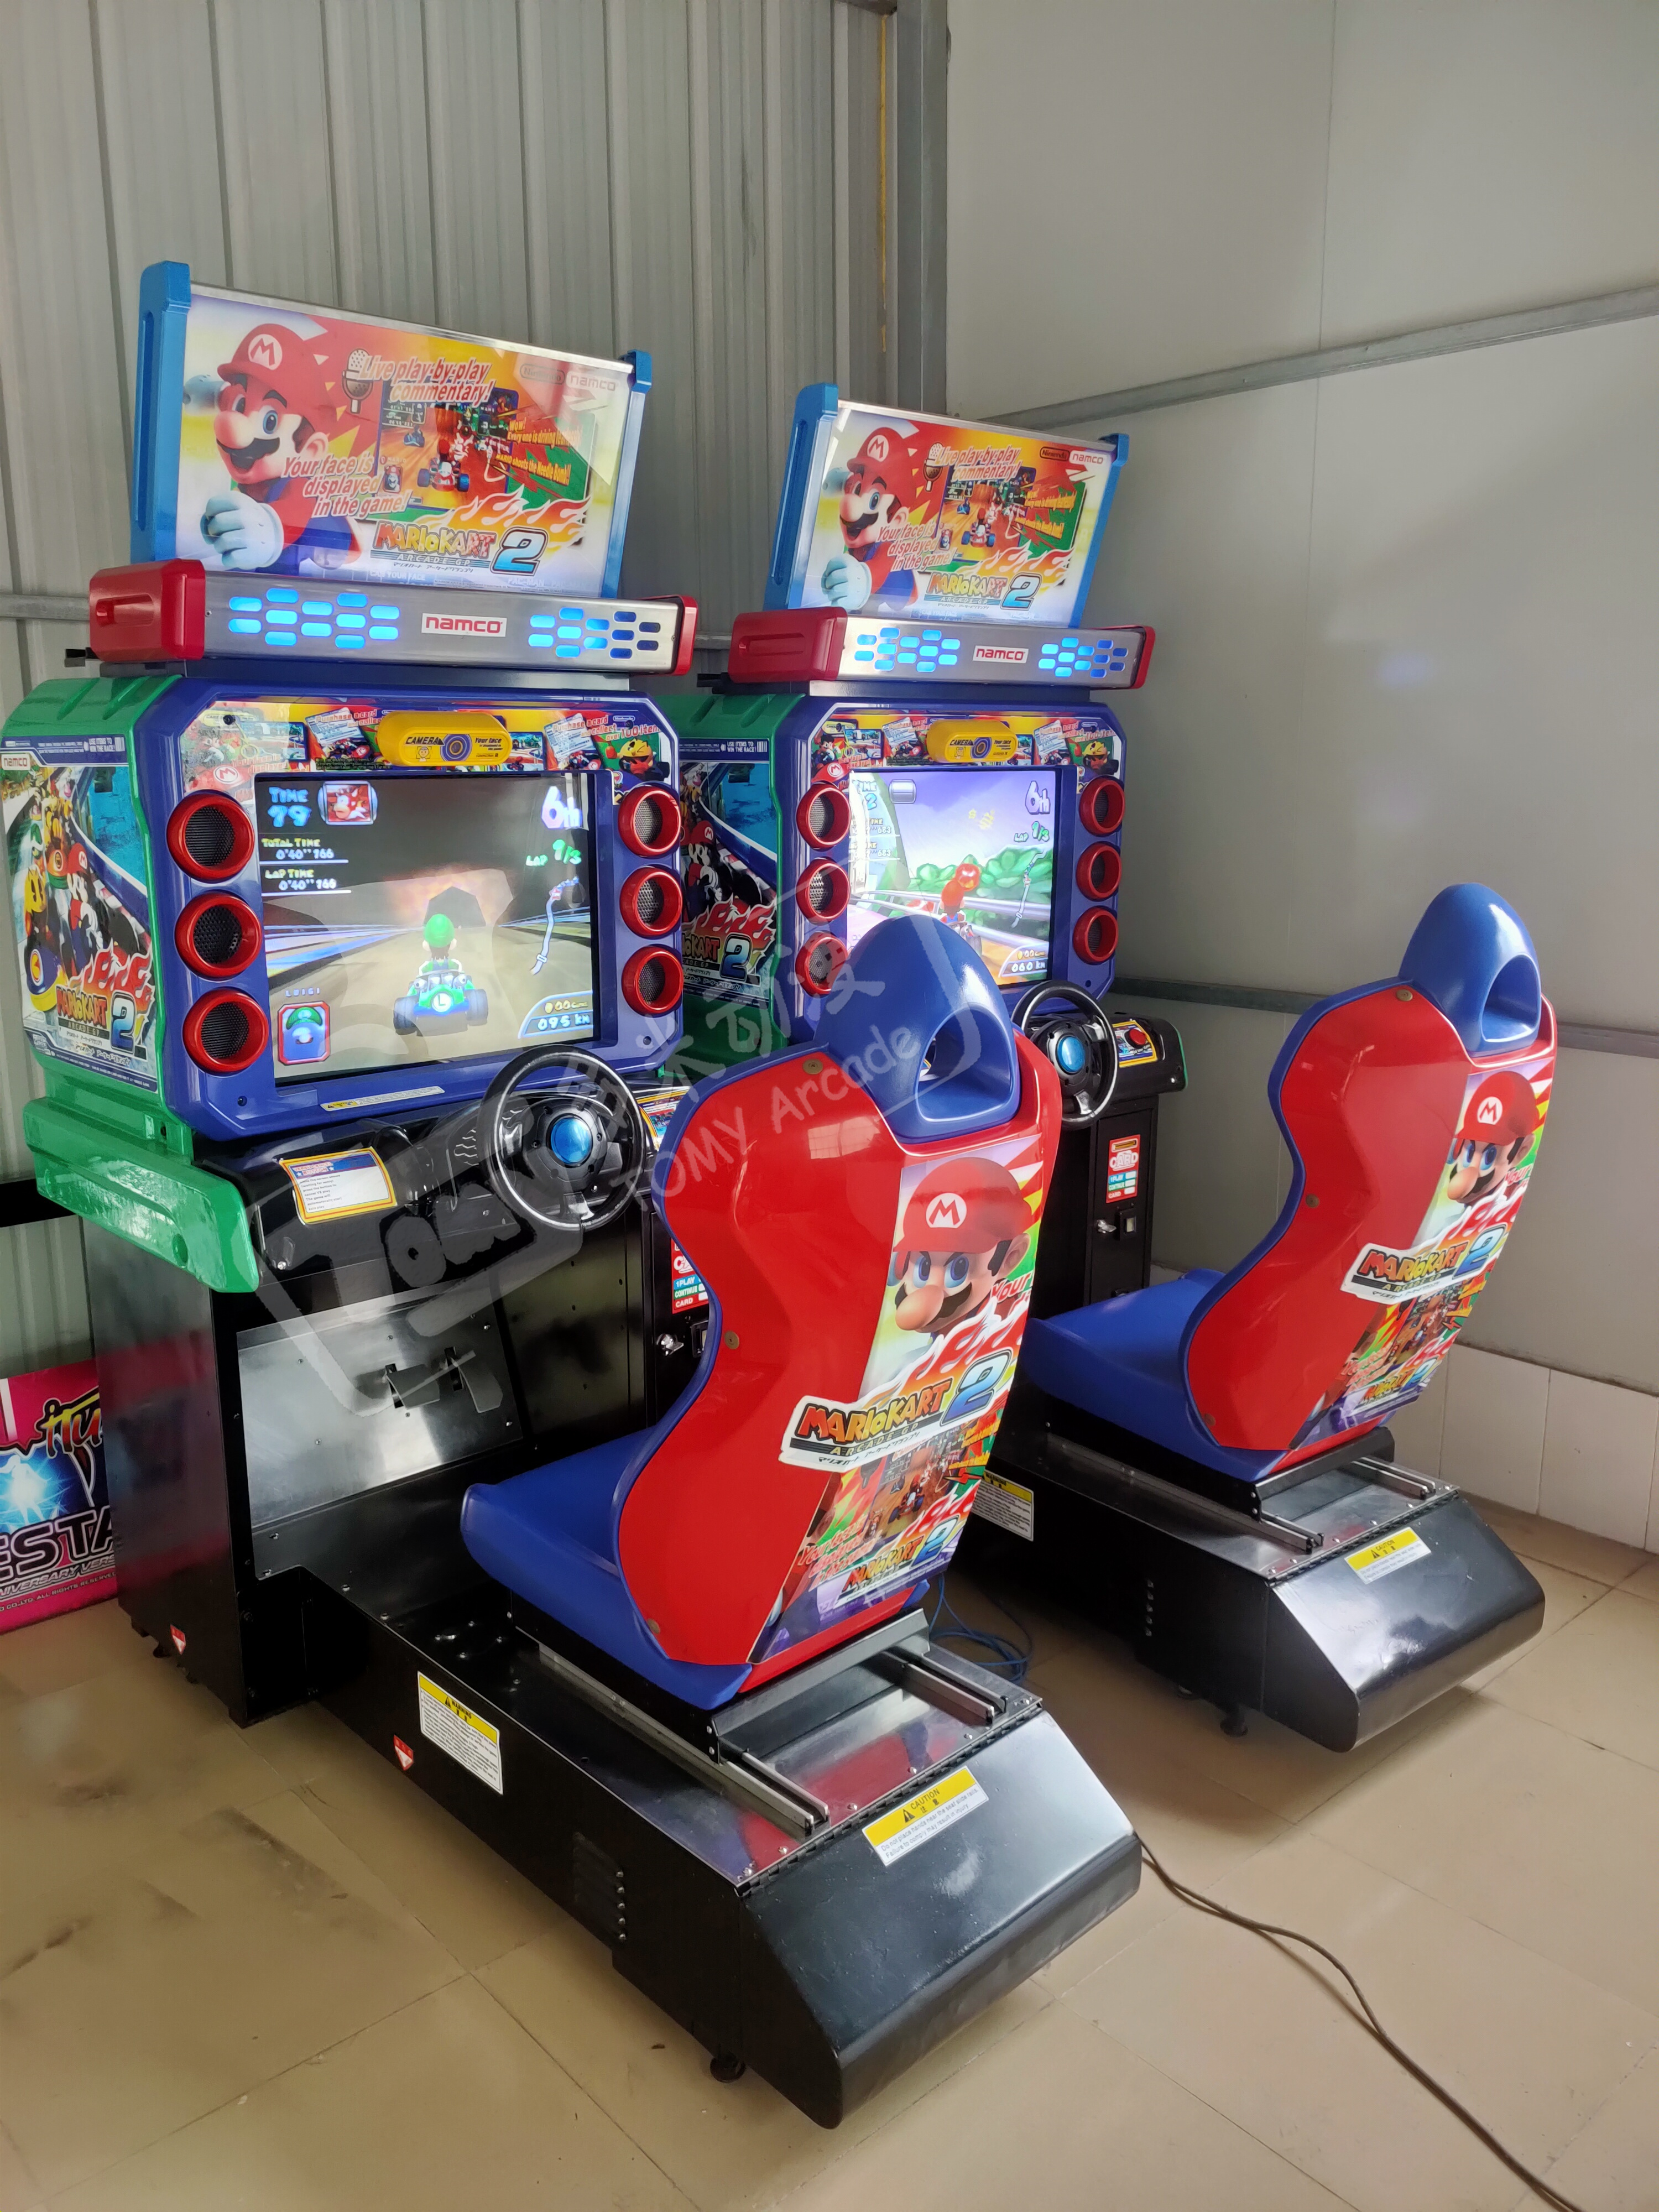 Mario kart gp2 arcade driving mario kart for sale-tomy arcade